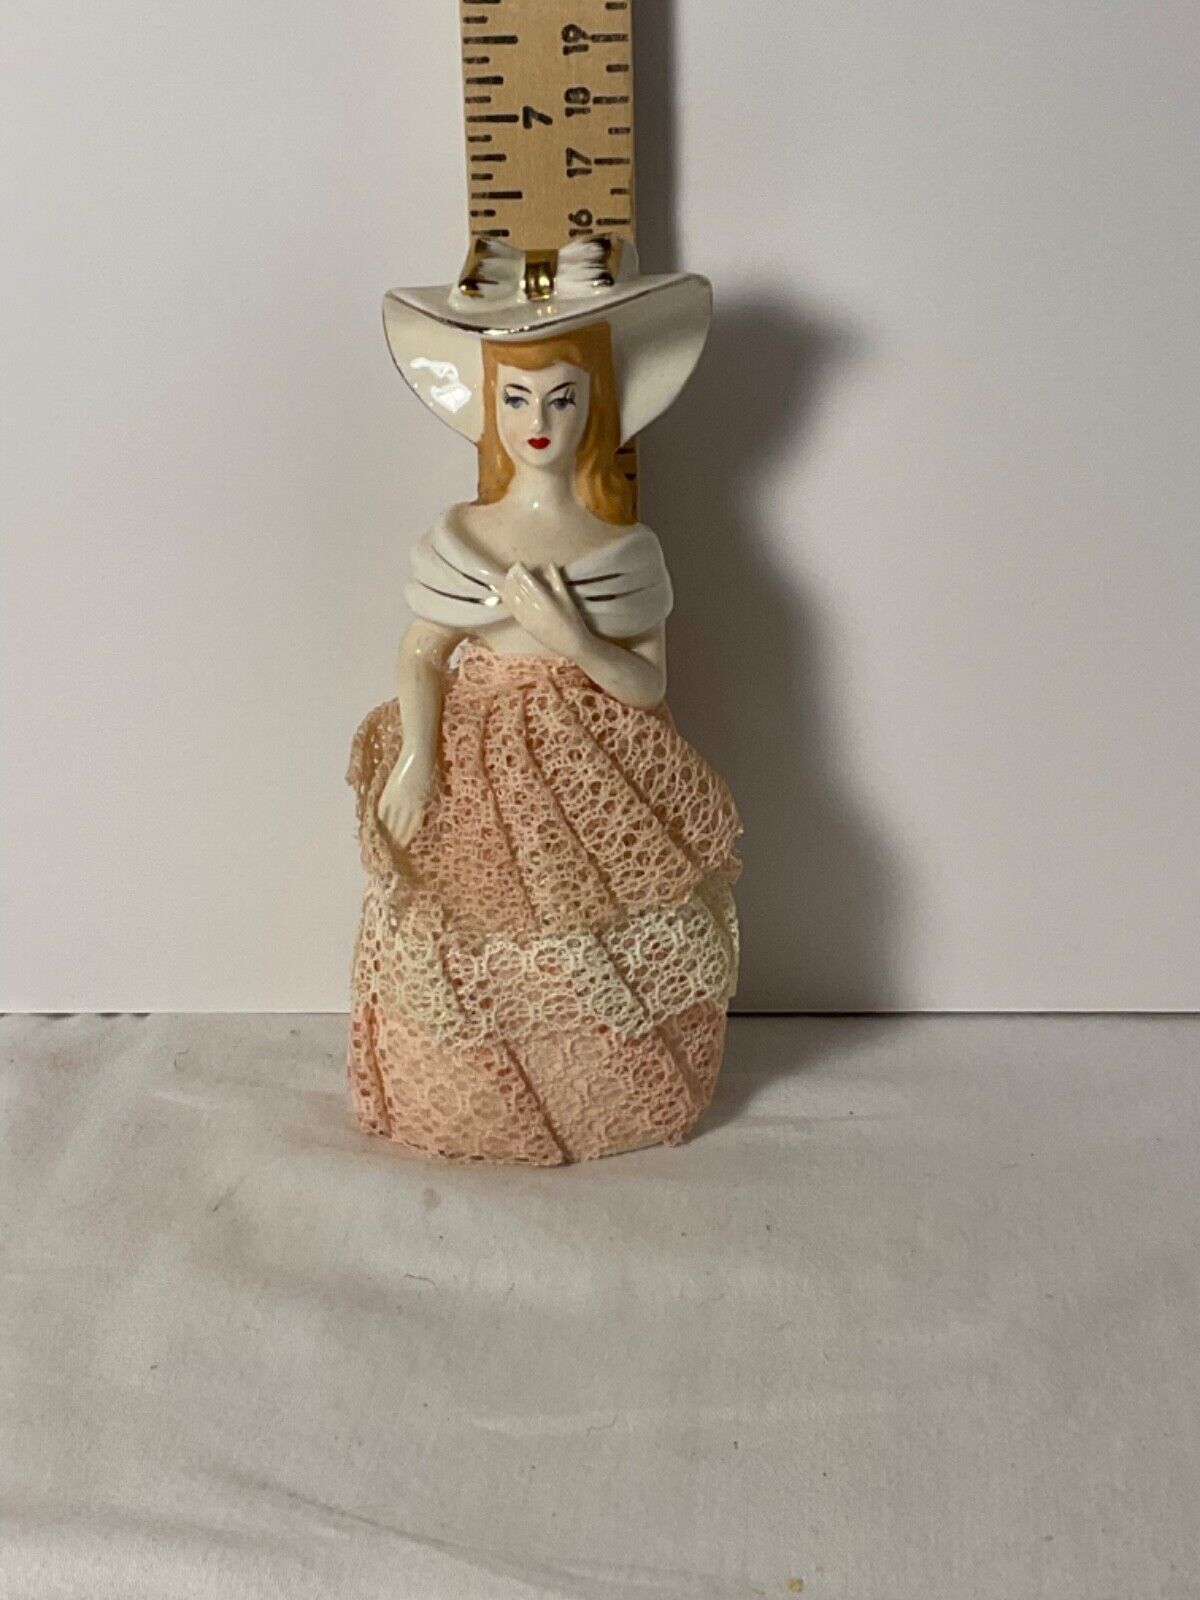 Original Arnart creation Vintage ceramic lady figurine hard lace style dress 6”